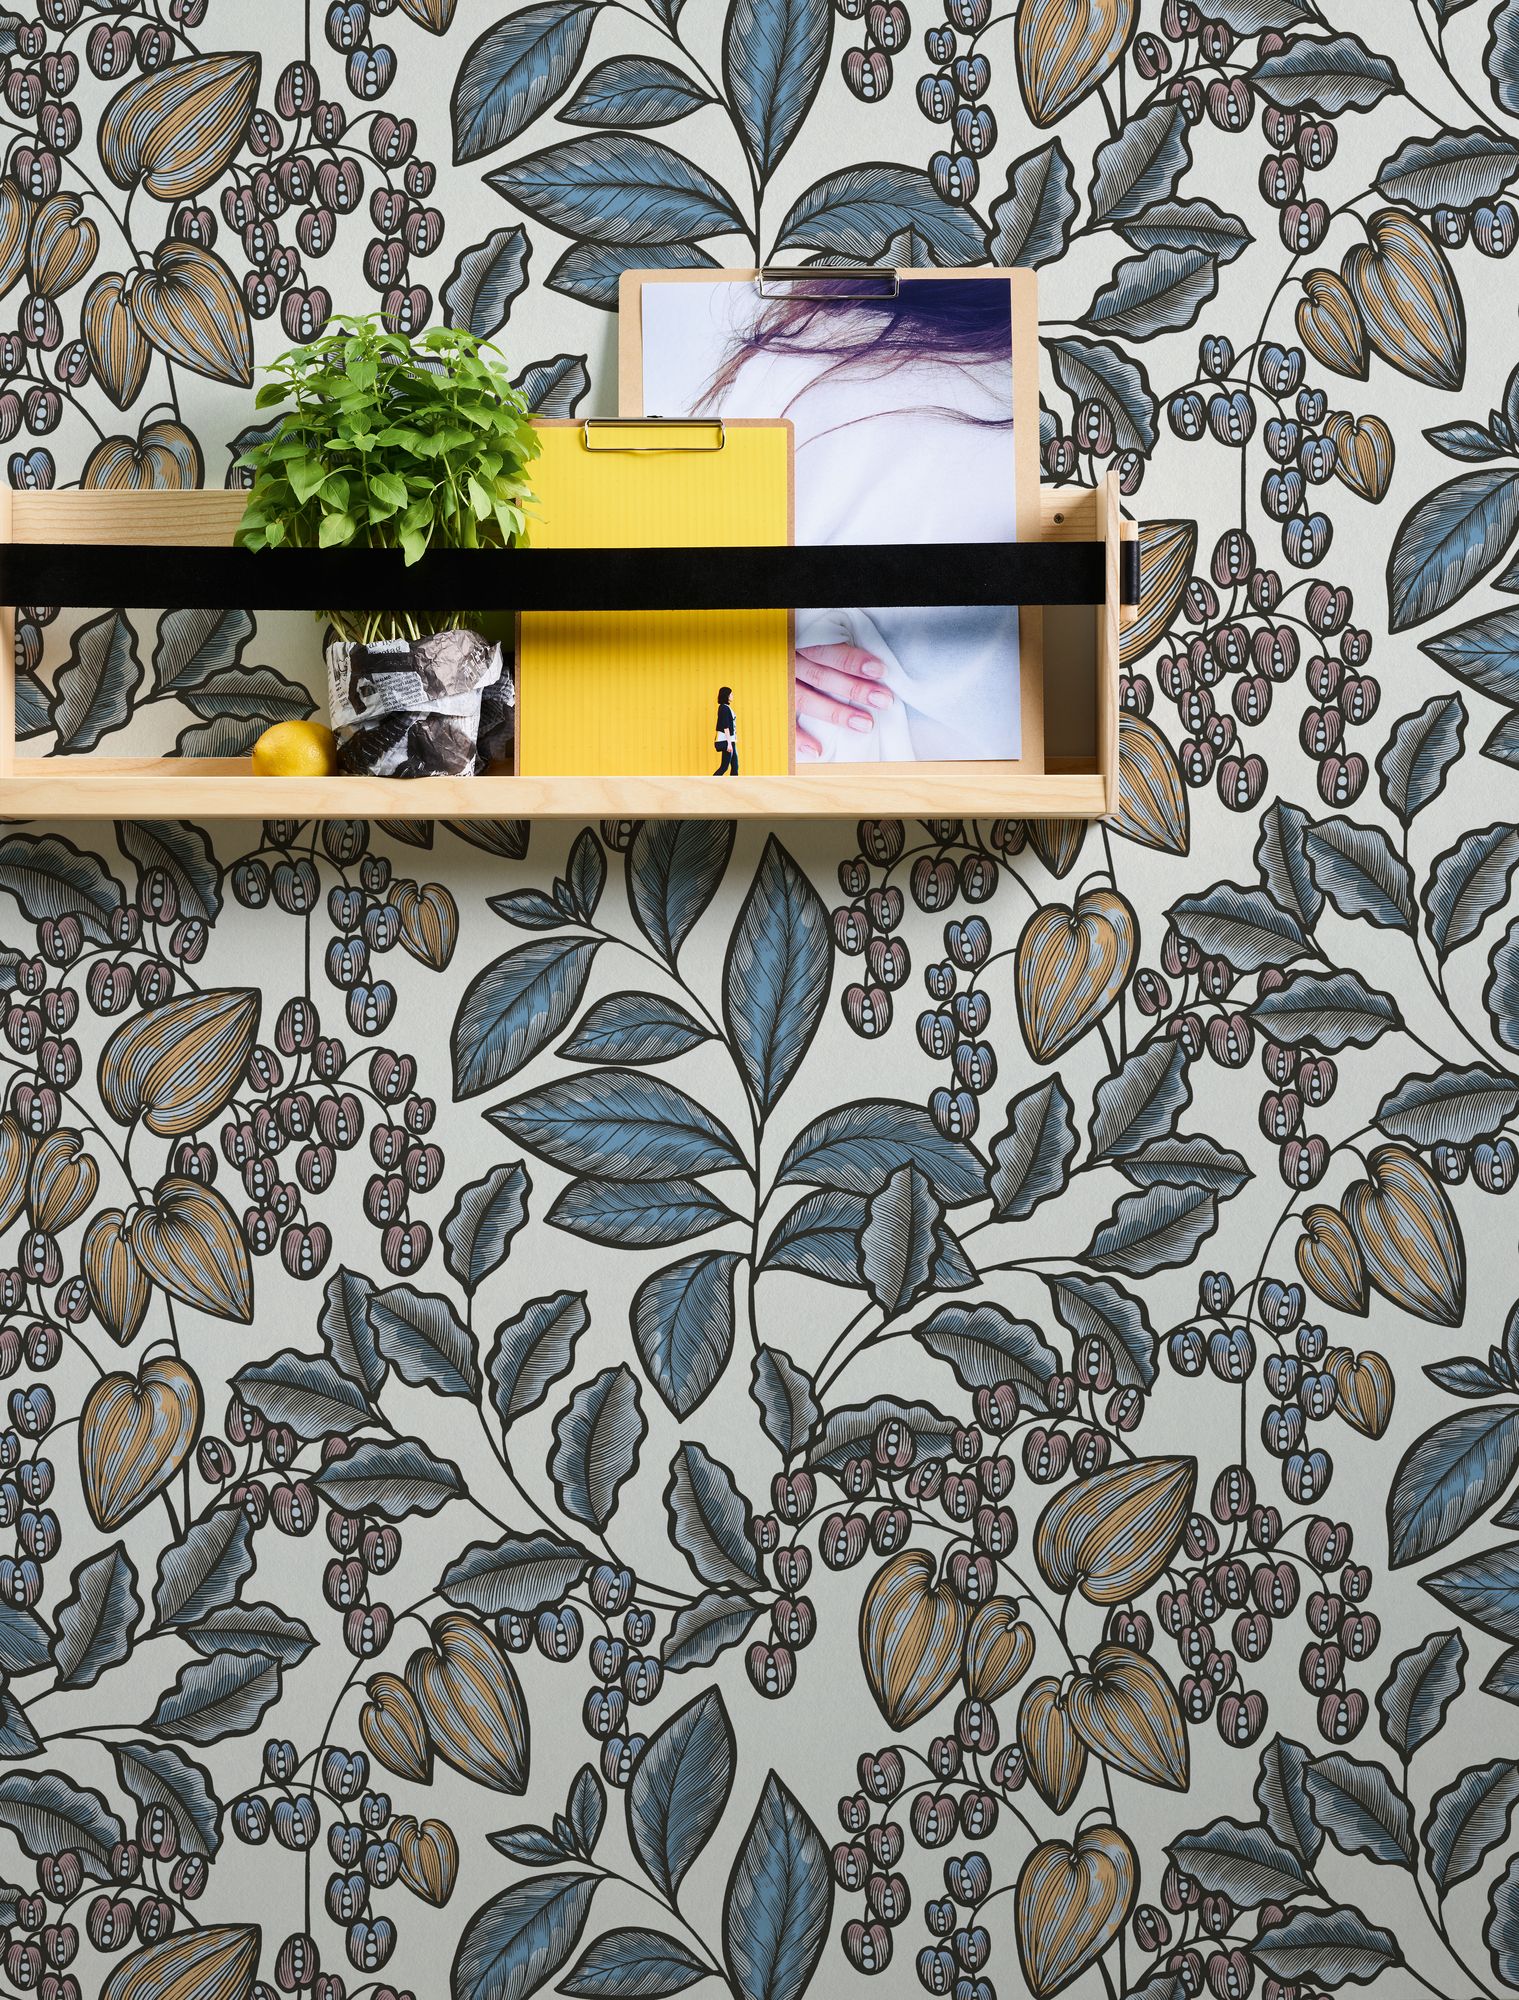 Architects Paper Floral Impression, Florale Tapete, blau, weiß 377548